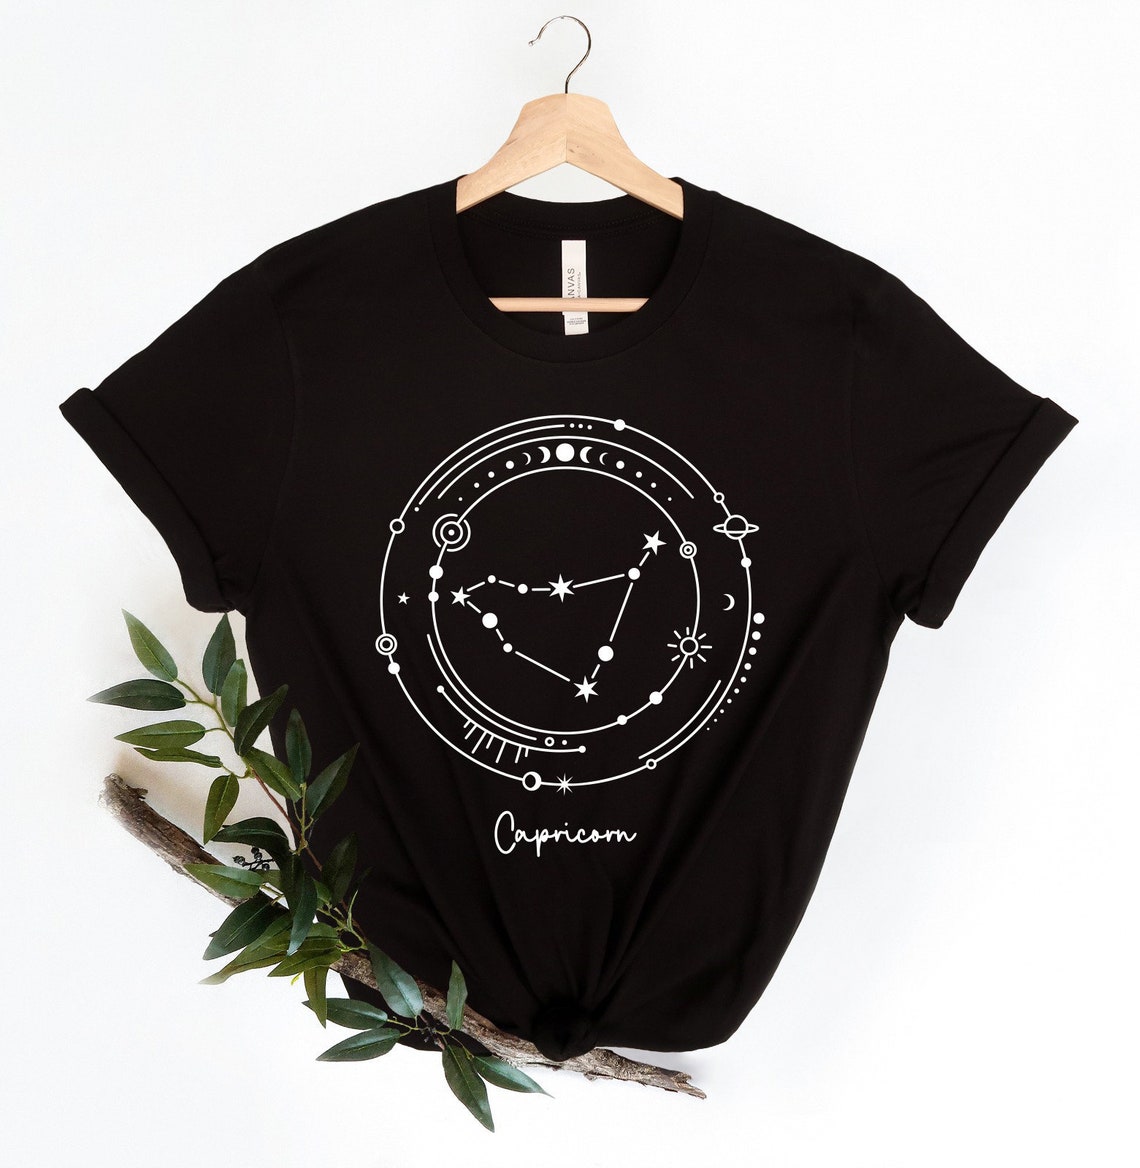 Astrology Shirt, Zodiac Signs Shirt, Horoscope Gift, Birthday Gifts